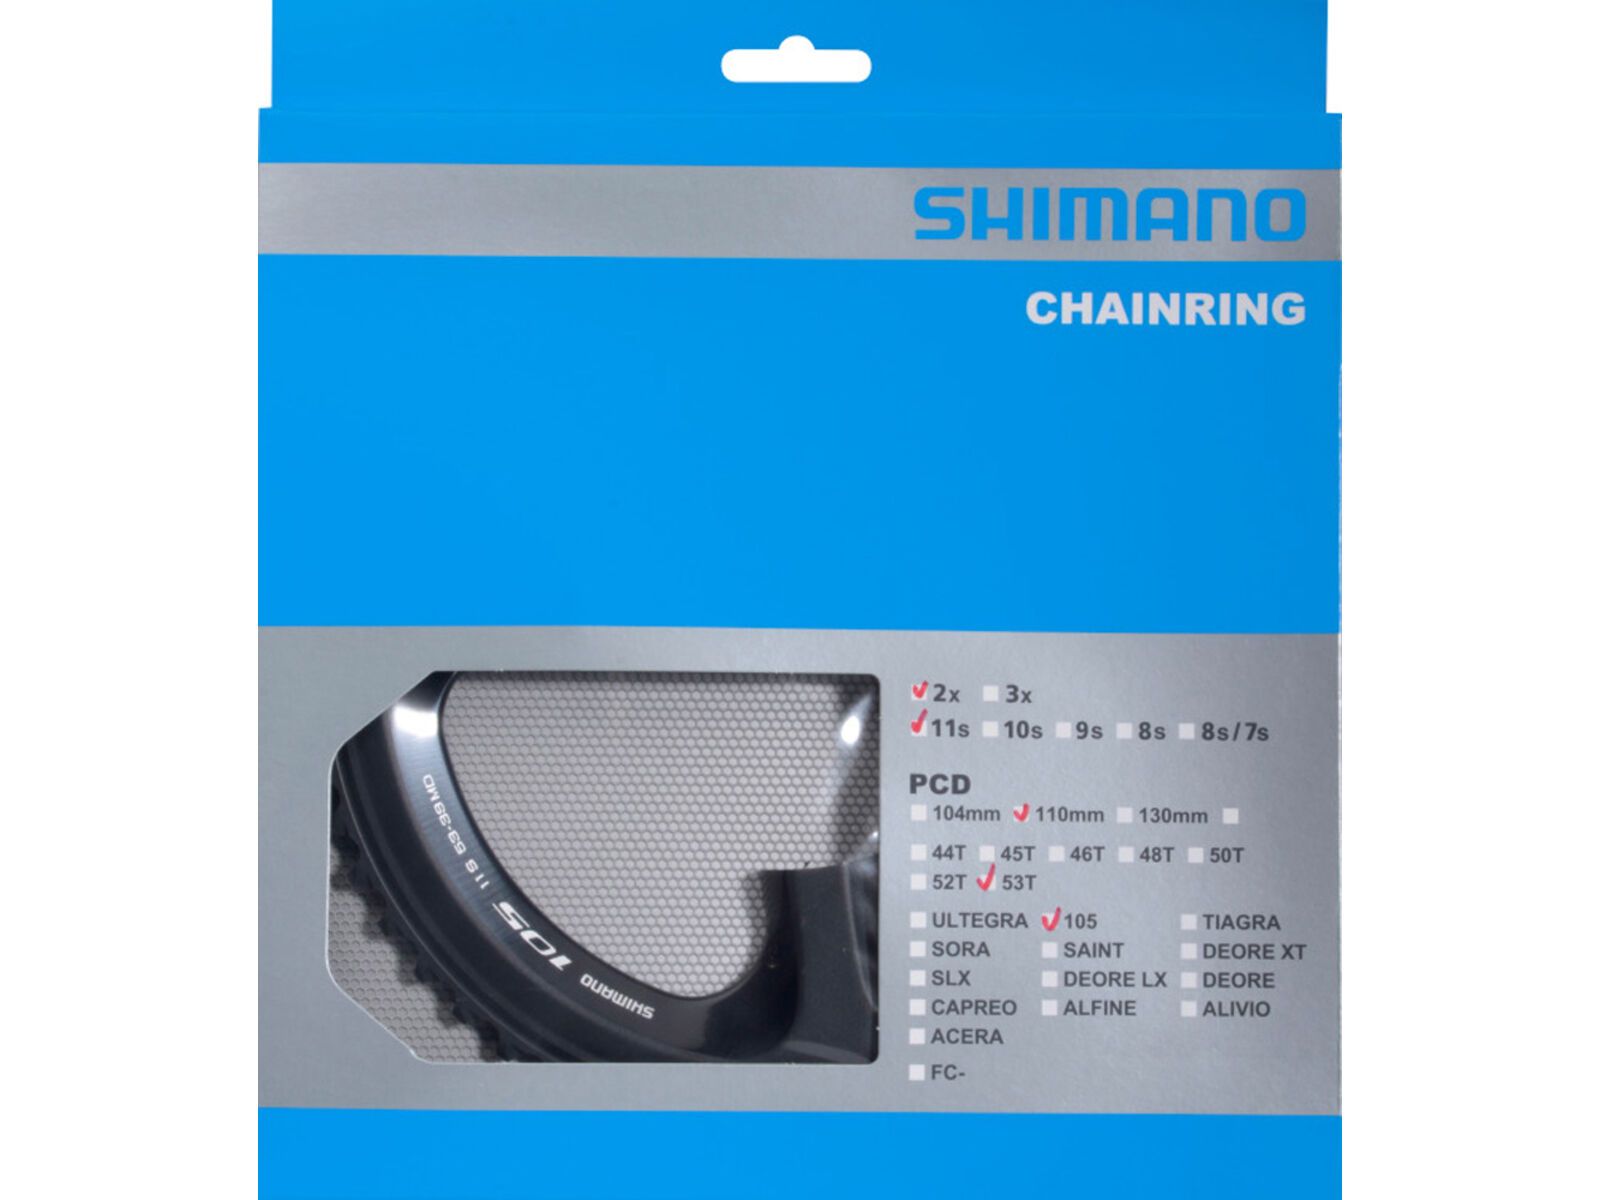 Shimano 105 FC-5800 Kettenblatt - 2x11 / Typ MD, schwarz | Bild 1